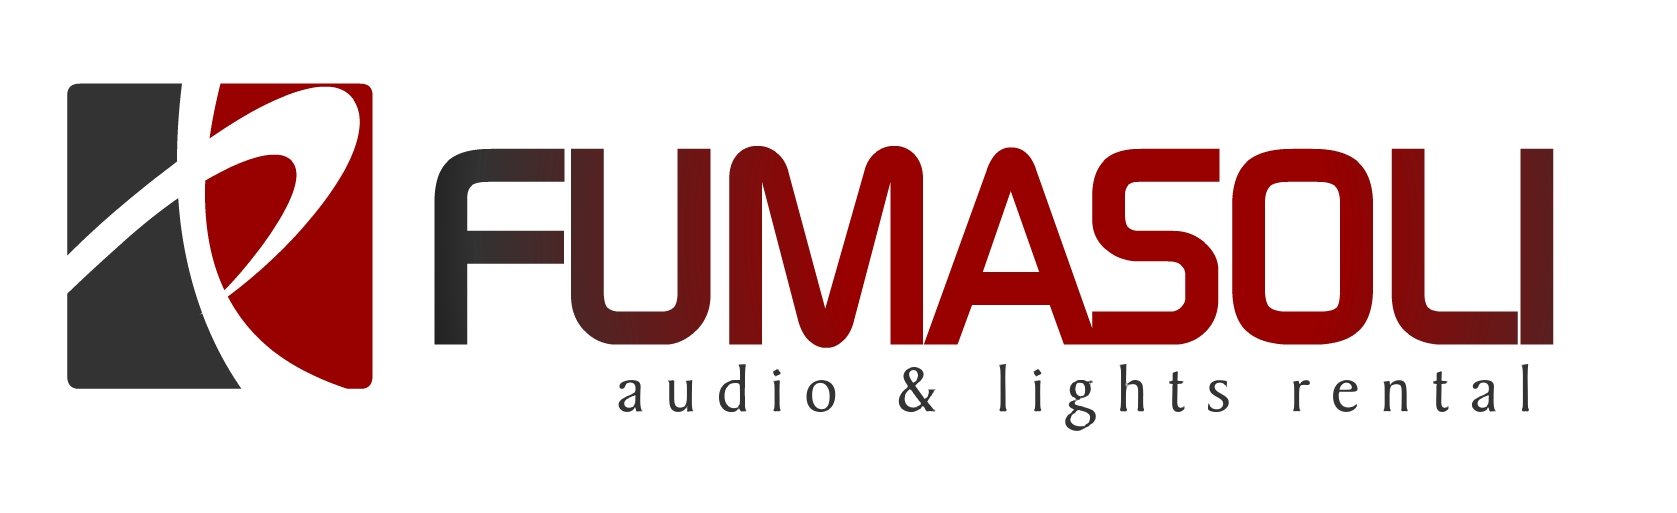 HOME fumasoli audio &  lights rental